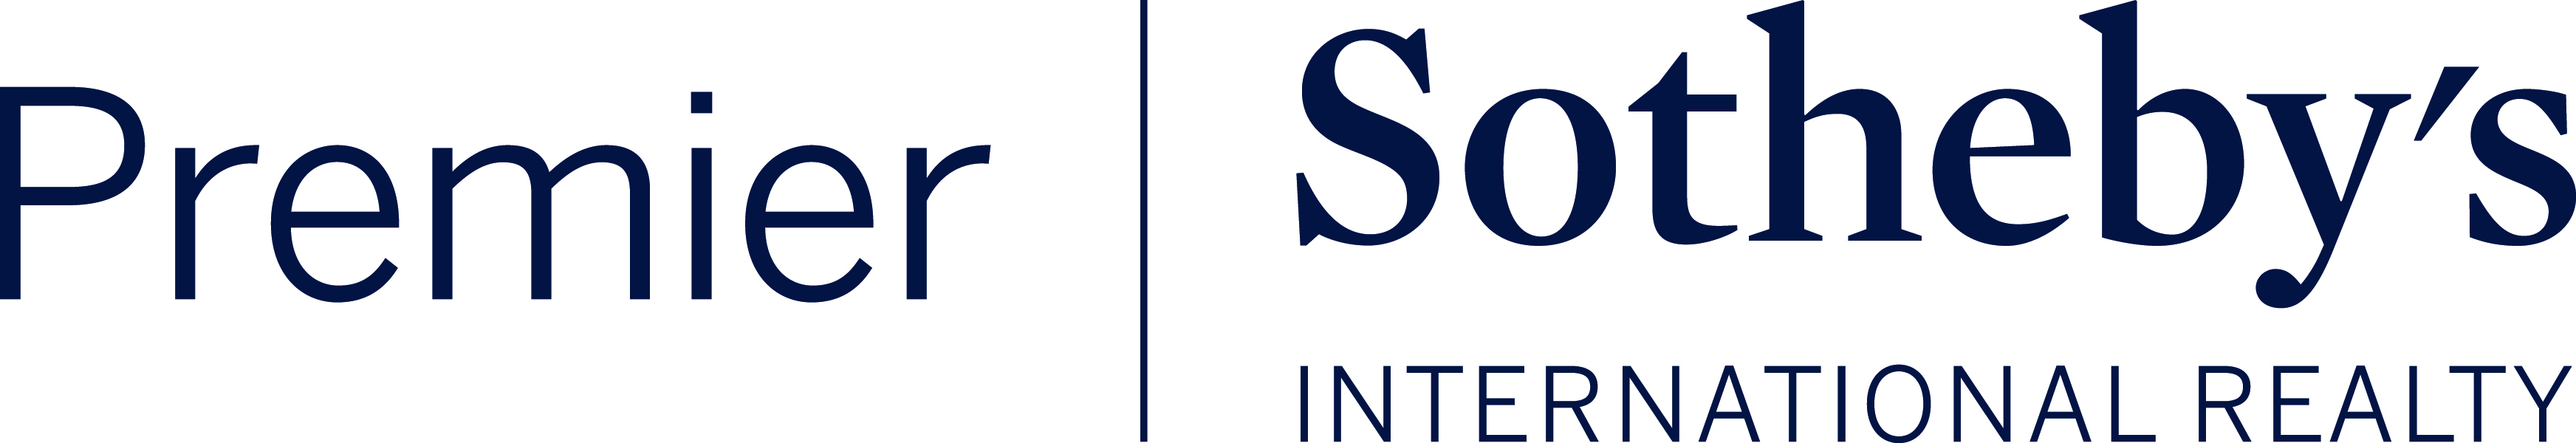 Premier Sotheby's Company Logo